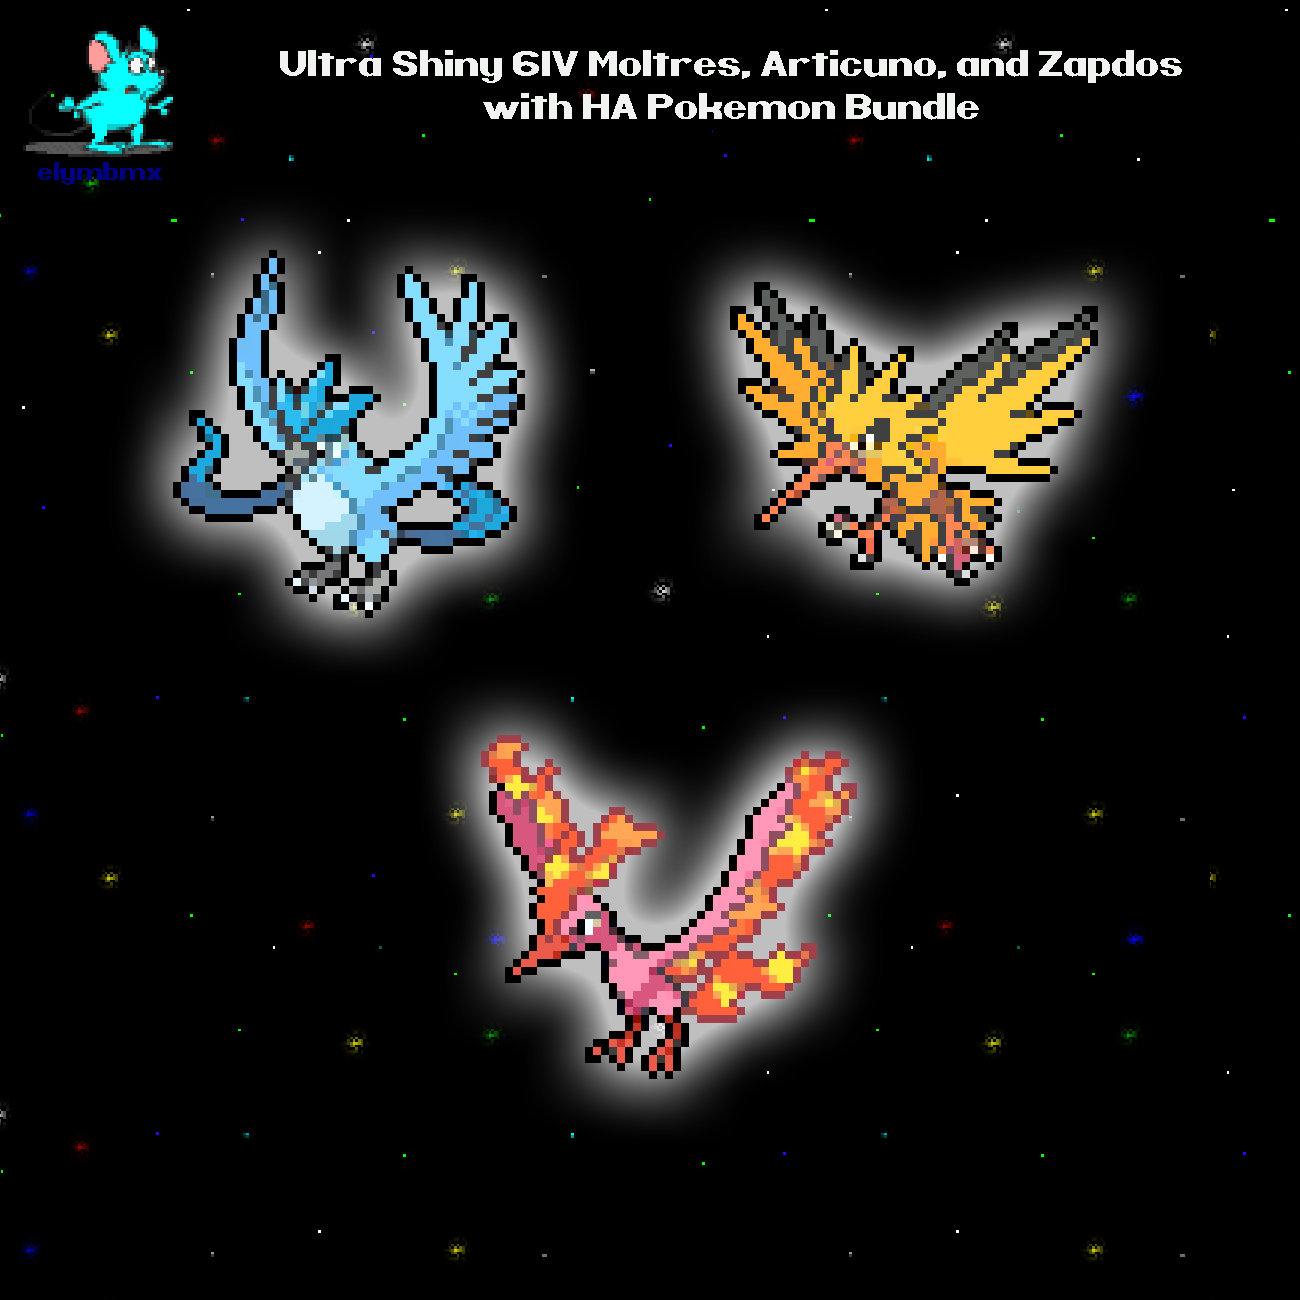 Shiny Legendary Articuno / Pokémon Brilliant Diamond and Shining Pearl /  6IV Pokemon / Shiny Pokemon / Legendary Pokemon